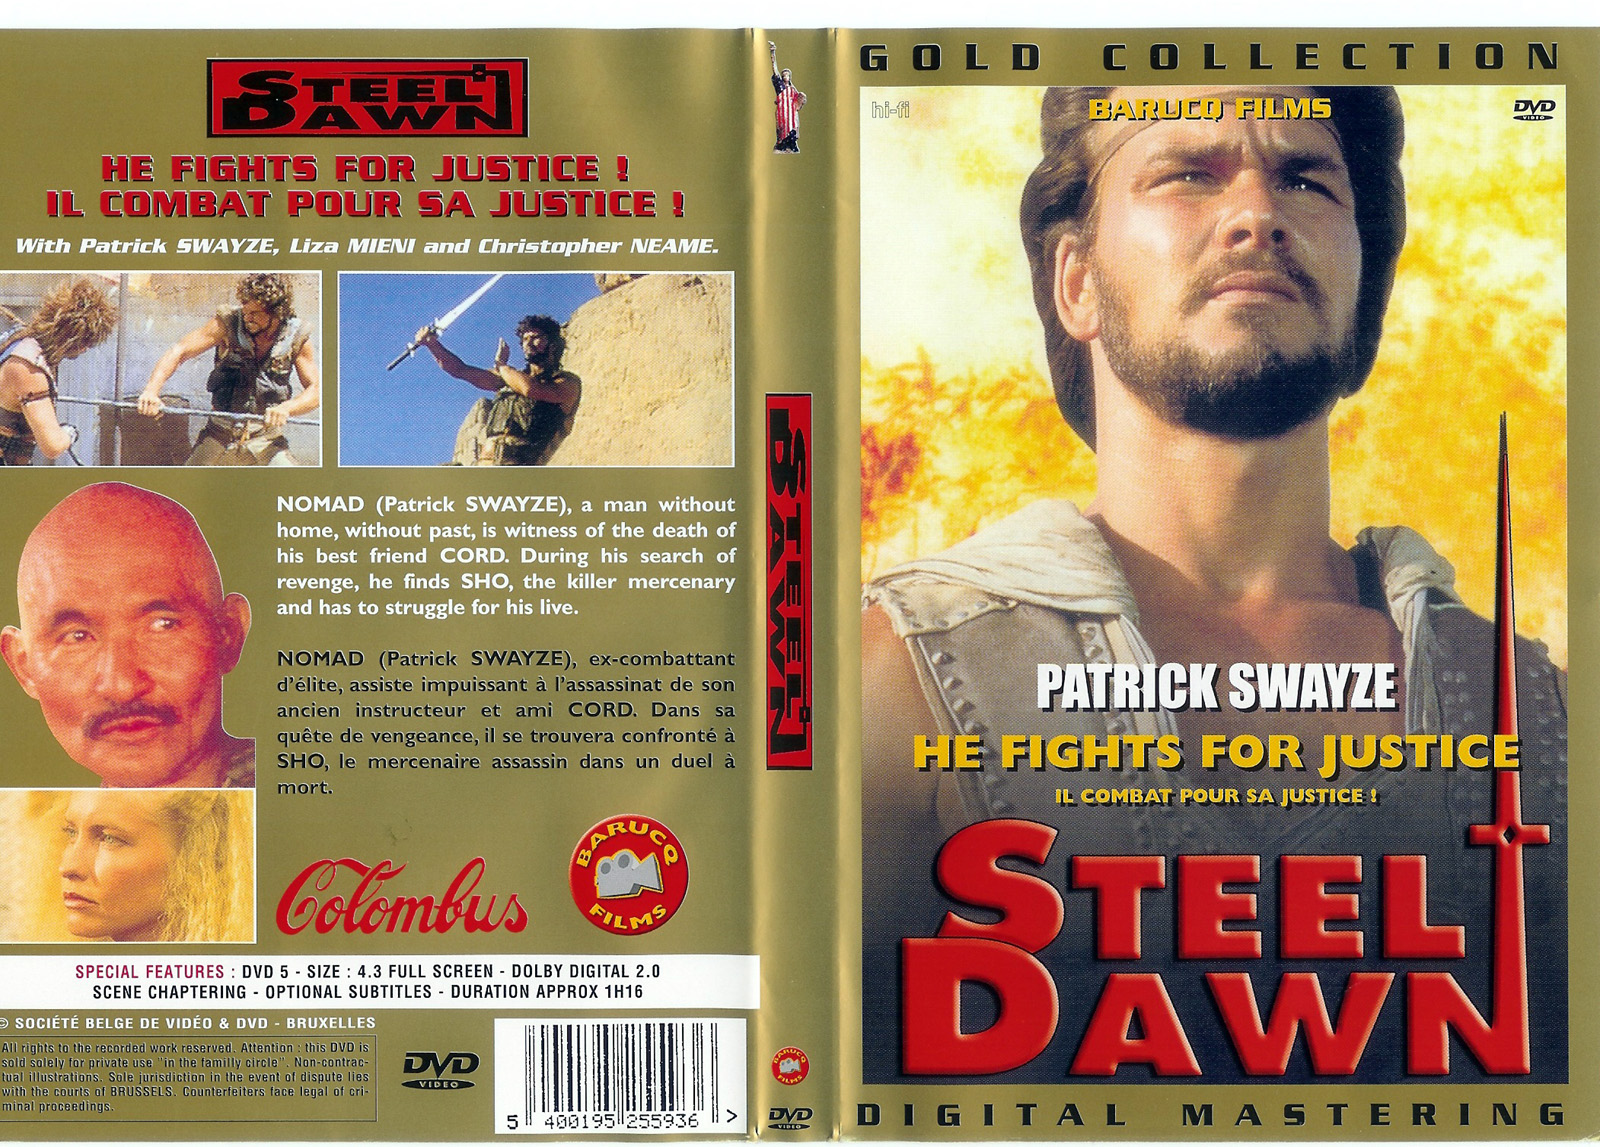 Jaquette DVD Steel Dawn